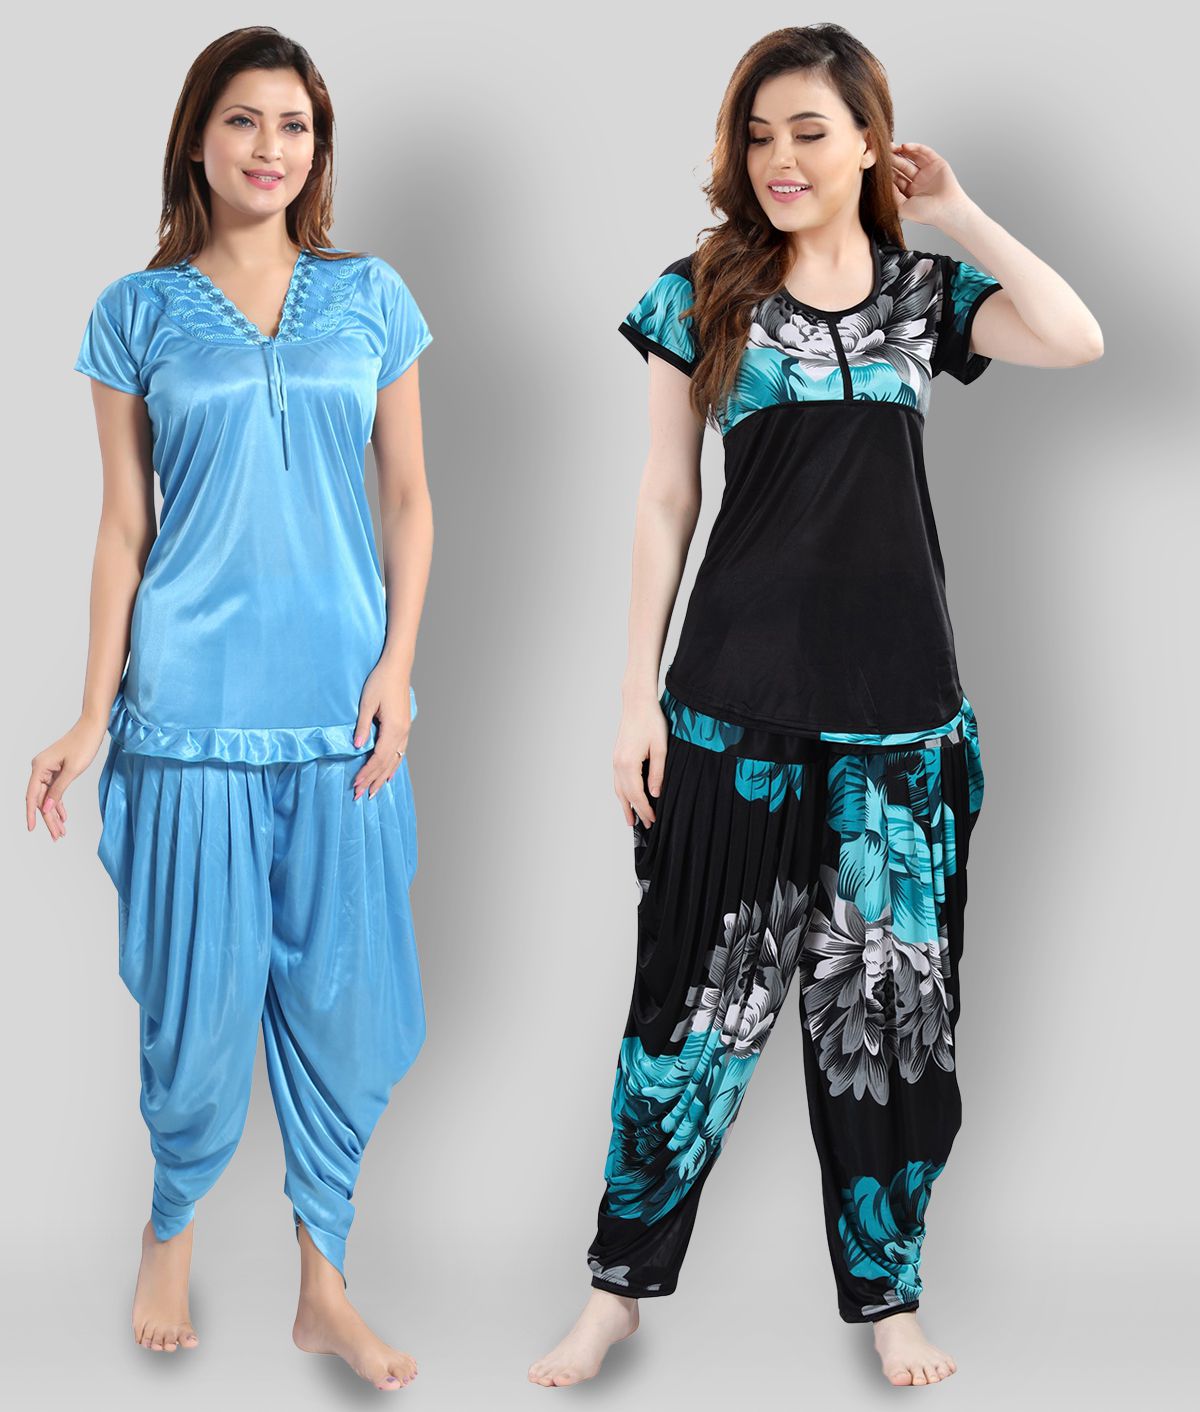     			Romaisa - Multicolor Satin Women's Nightwear Nightsuit Sets ( Pack of 4 )